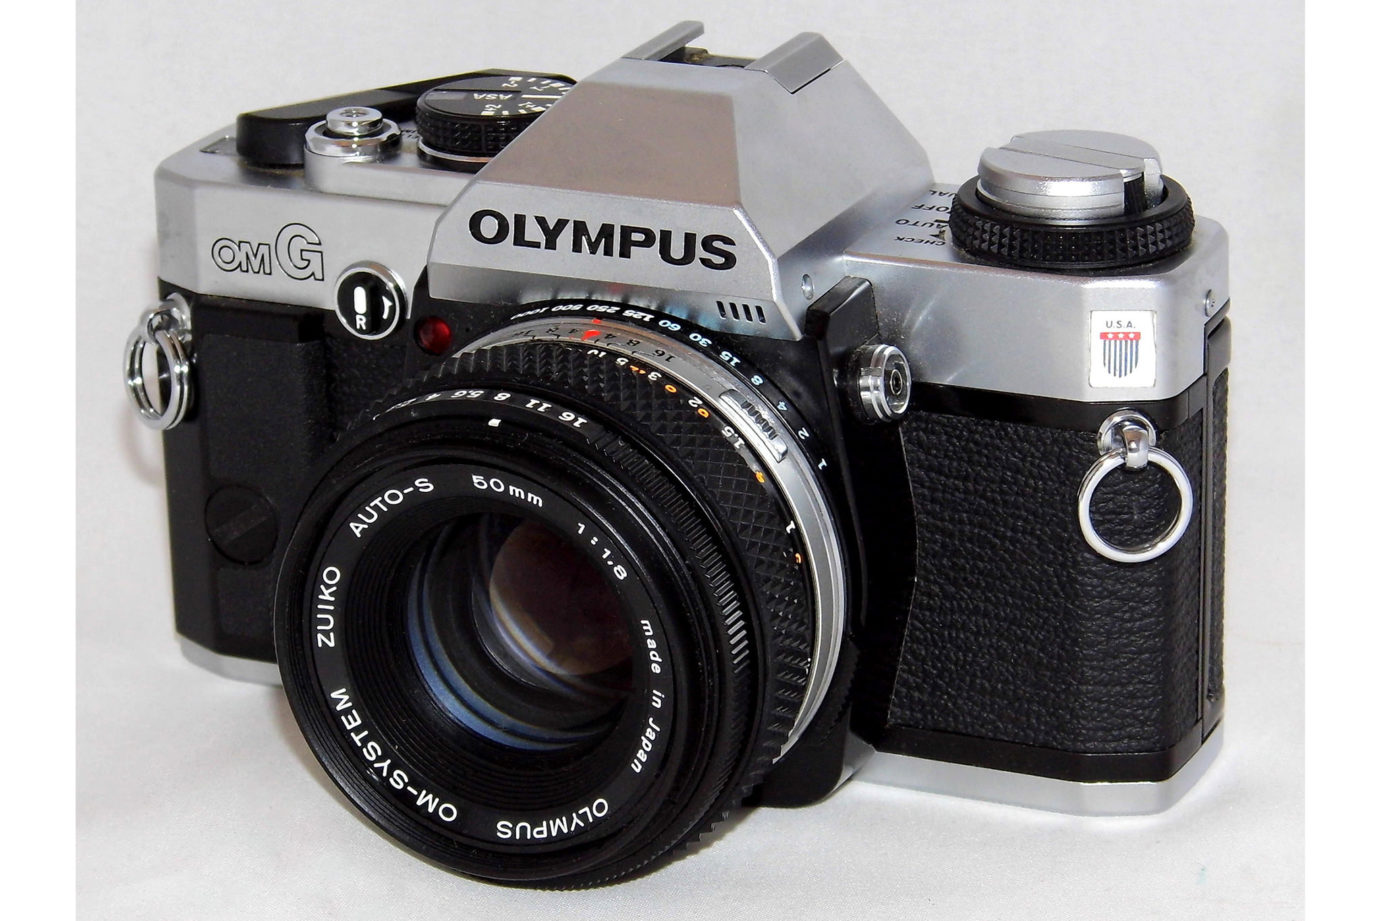 Olympus OM-G - 35mm Kleinbildkamera